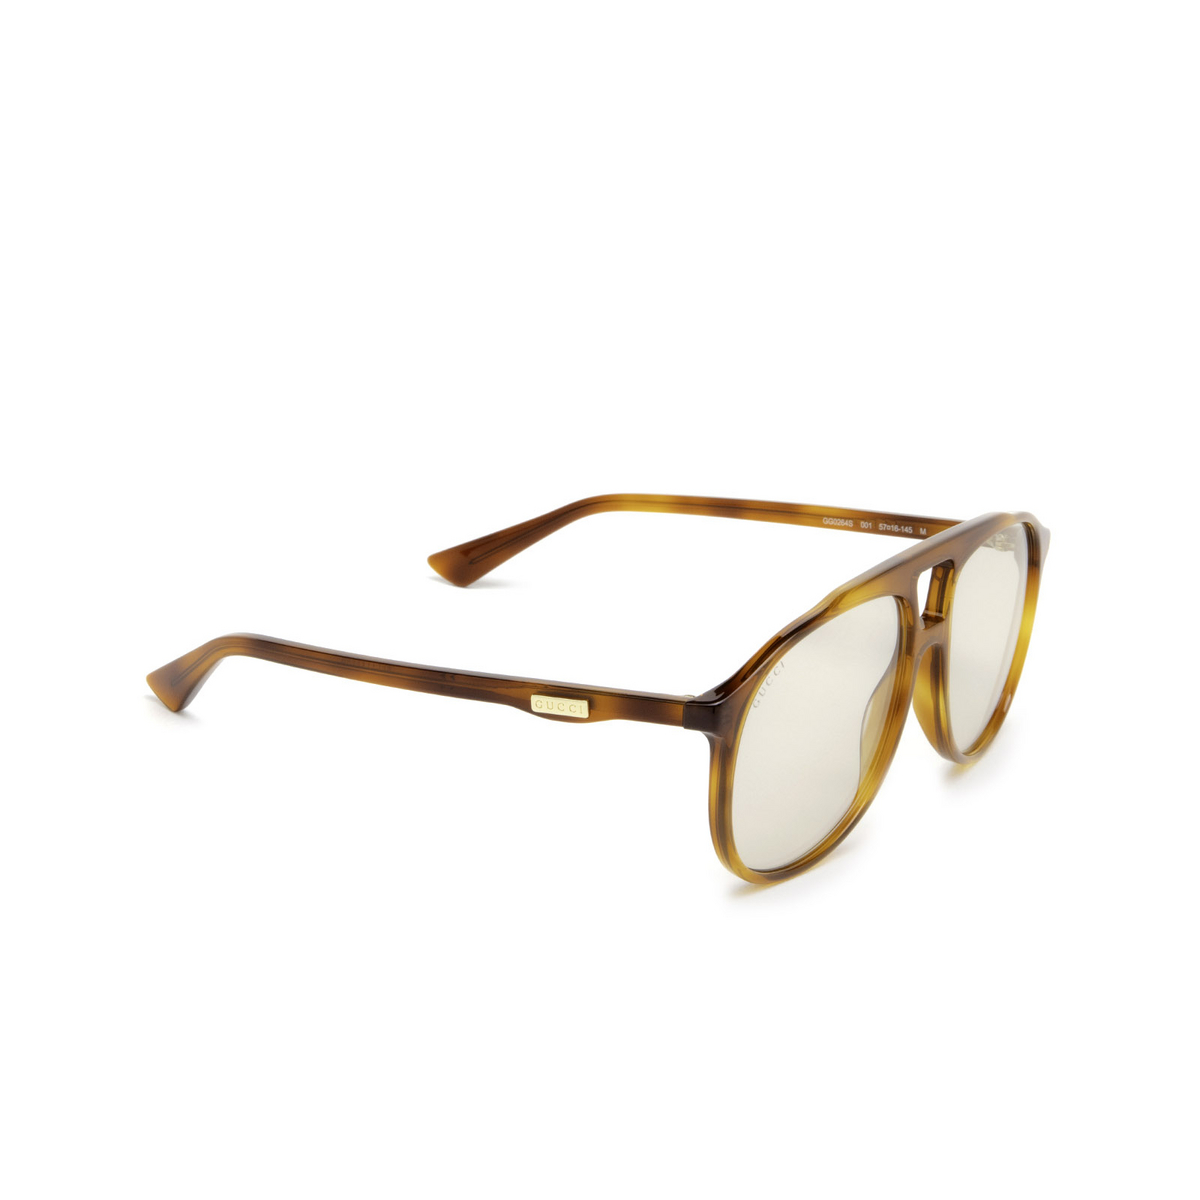 Gucci® Aviator Sunglasses: GG0264S color Havana 001 - three-quarters view.